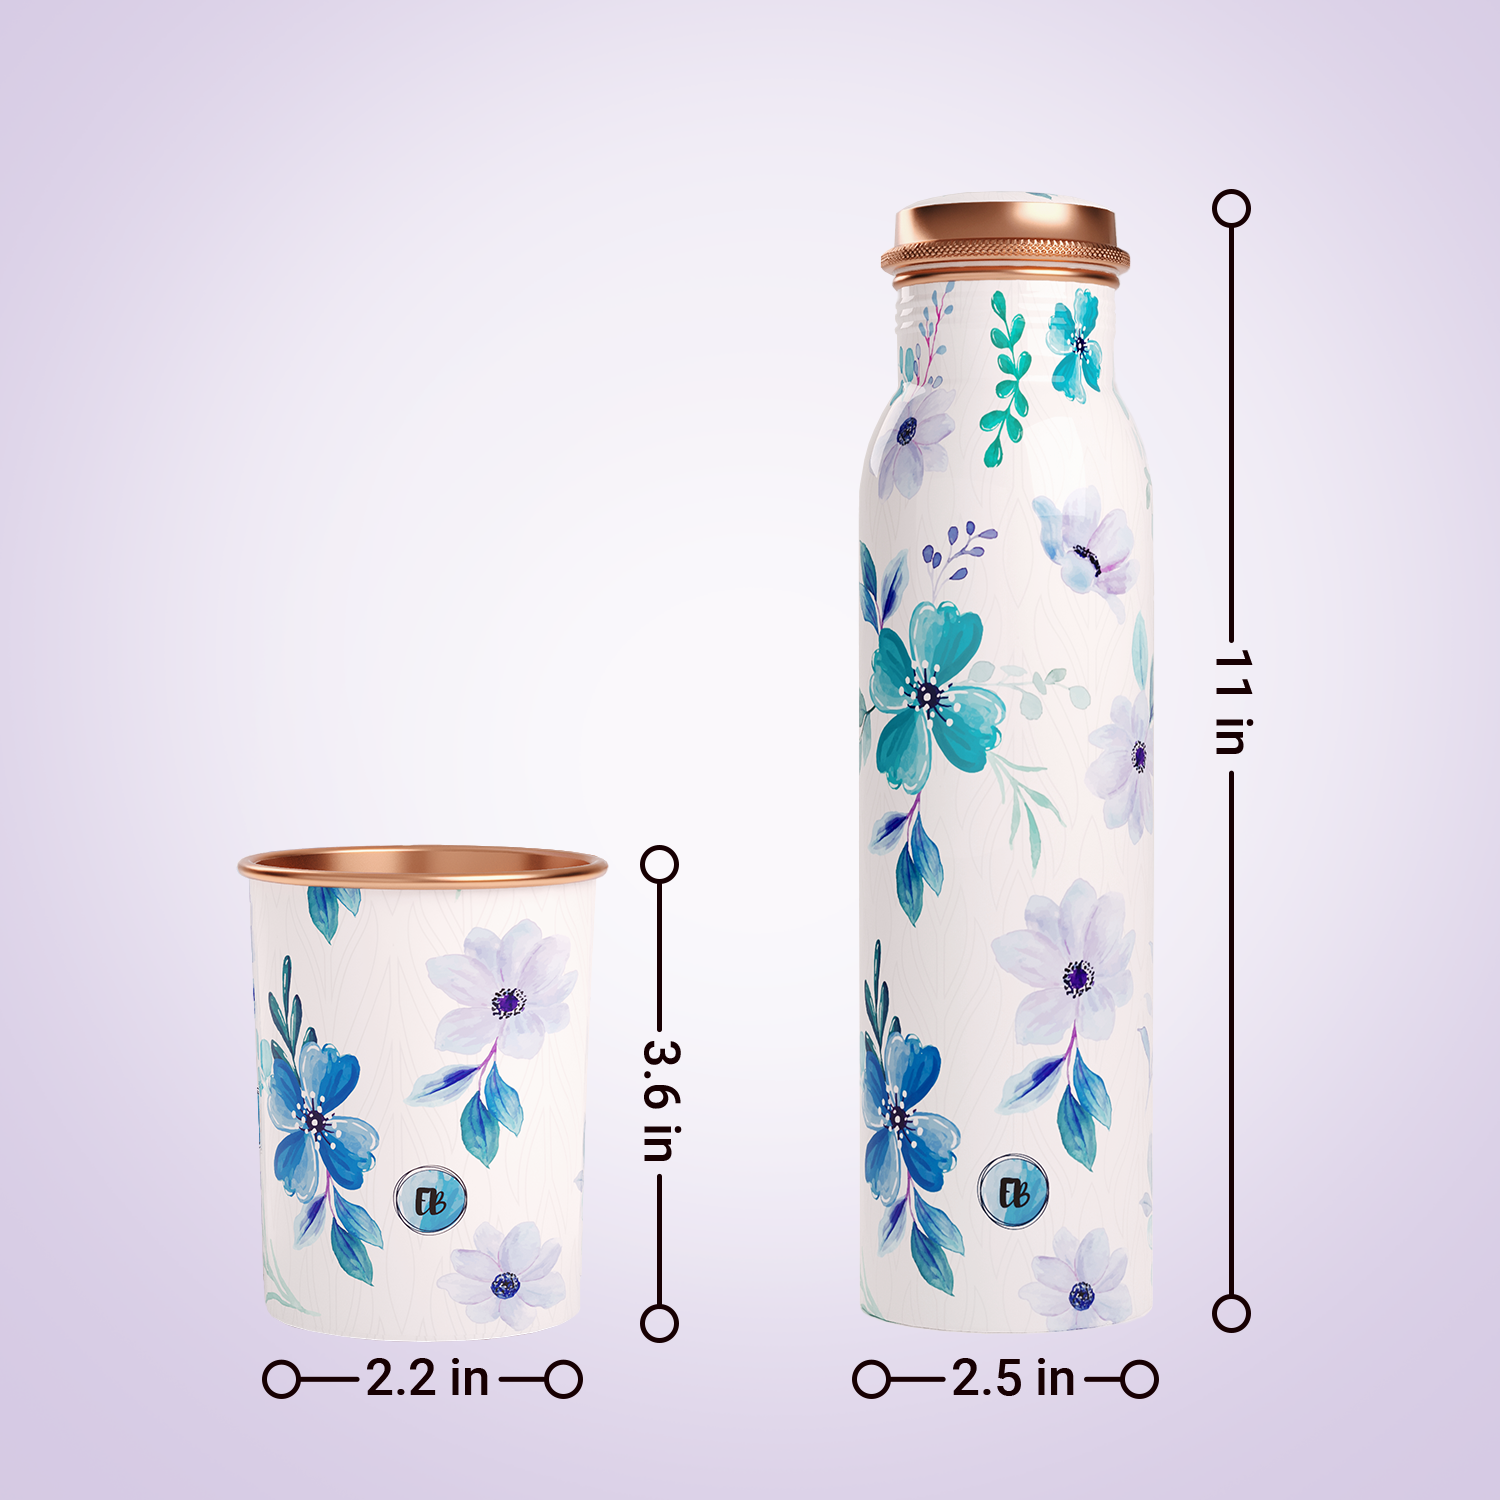 white flower design copper bottle copper water bottle 1 litre printed copper bottle benefits of copper water #color_white flower